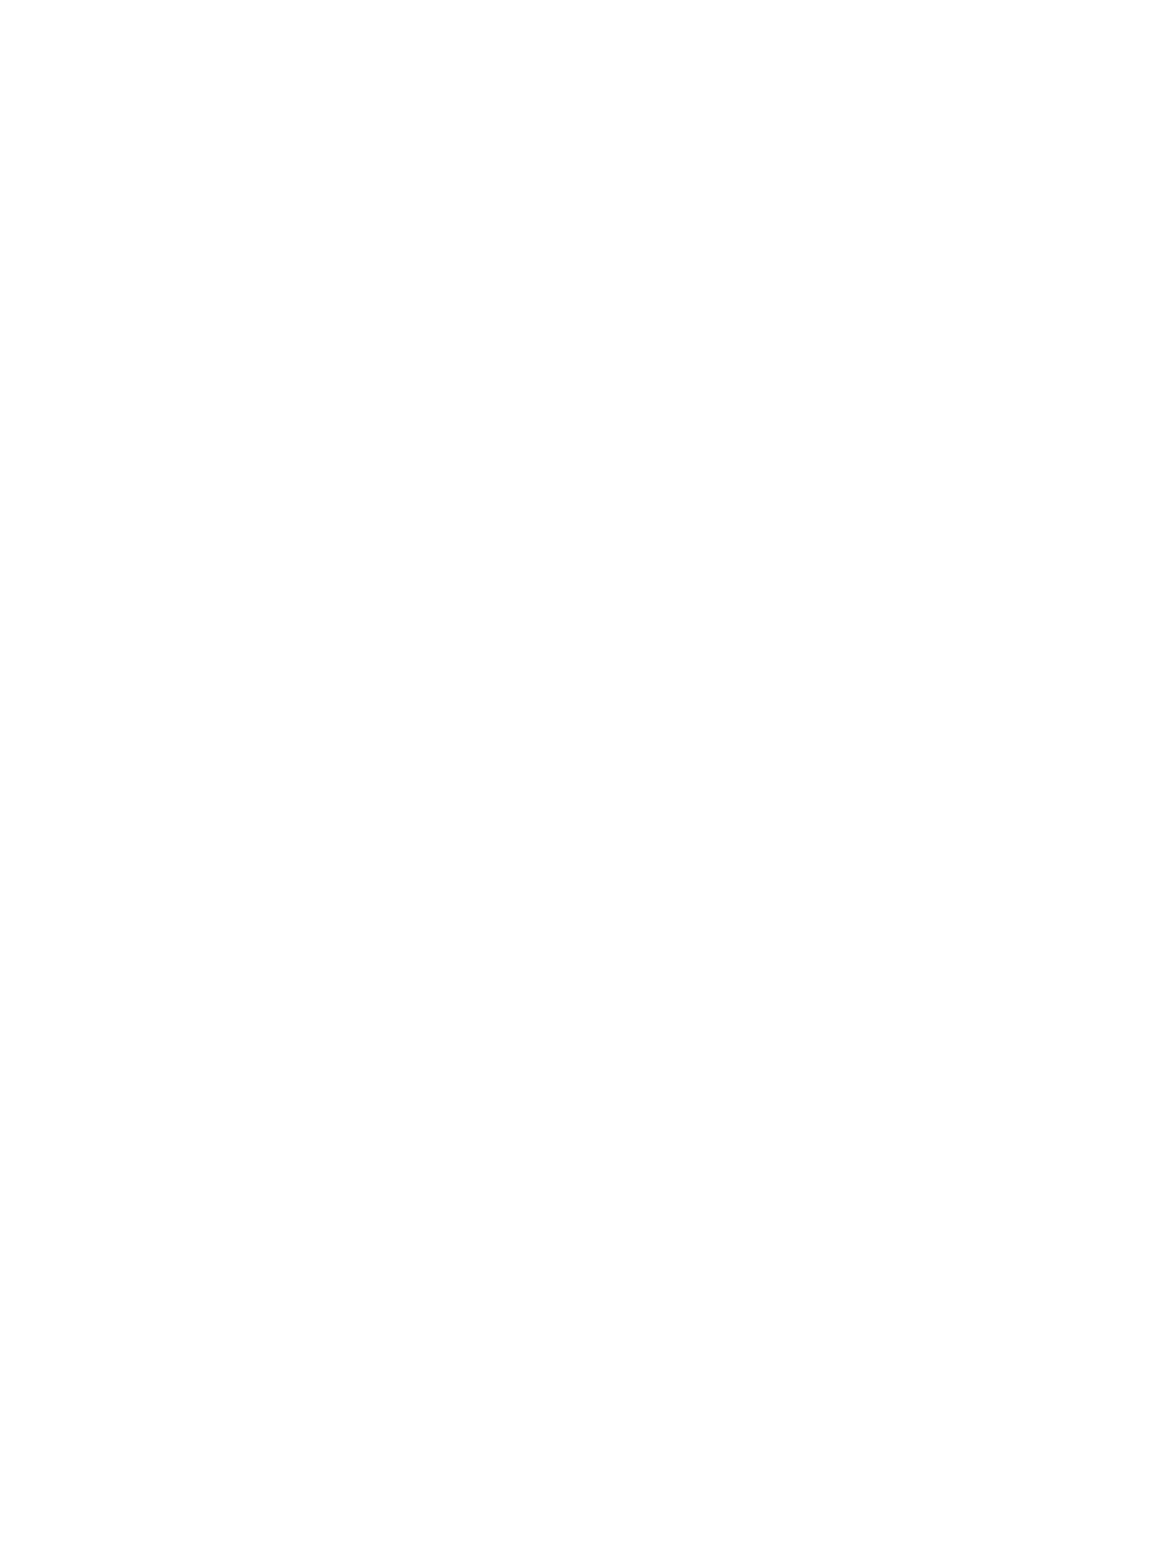 Croda International logo for dark backgrounds (transparent PNG)